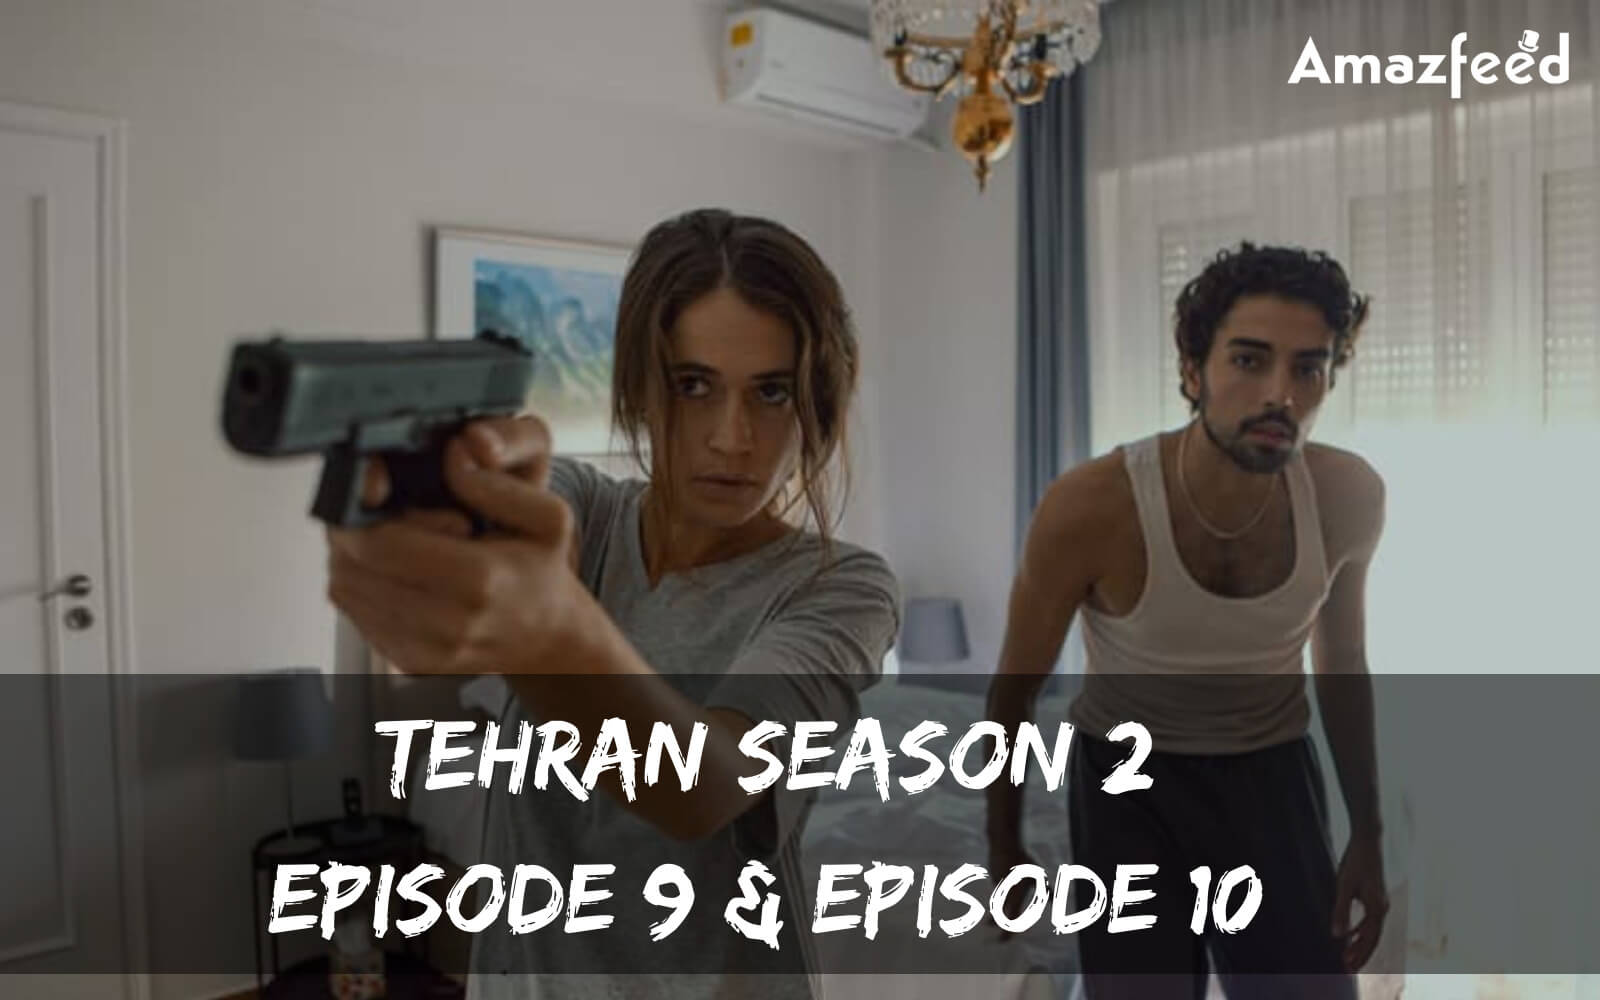 Tehran Season 2 Episode 9 release date